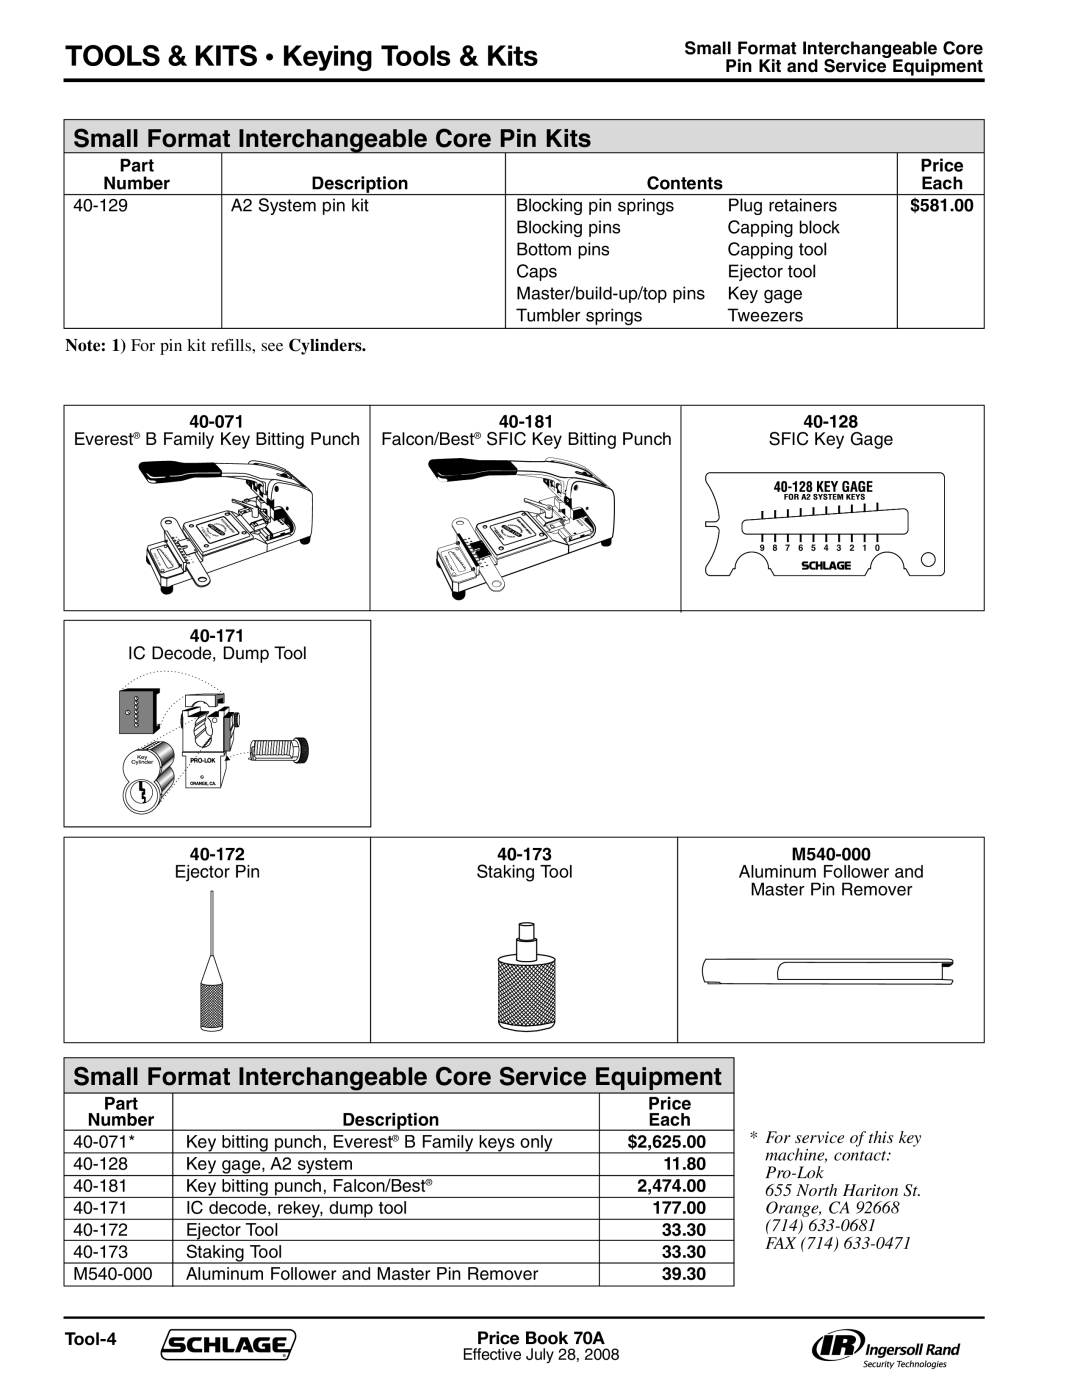 Schlage 70A Small Format Interchangeable Core Pin Kits, TOOLS & KITS • Keying Tools & Kits, North Hariton St. Orange, CA 